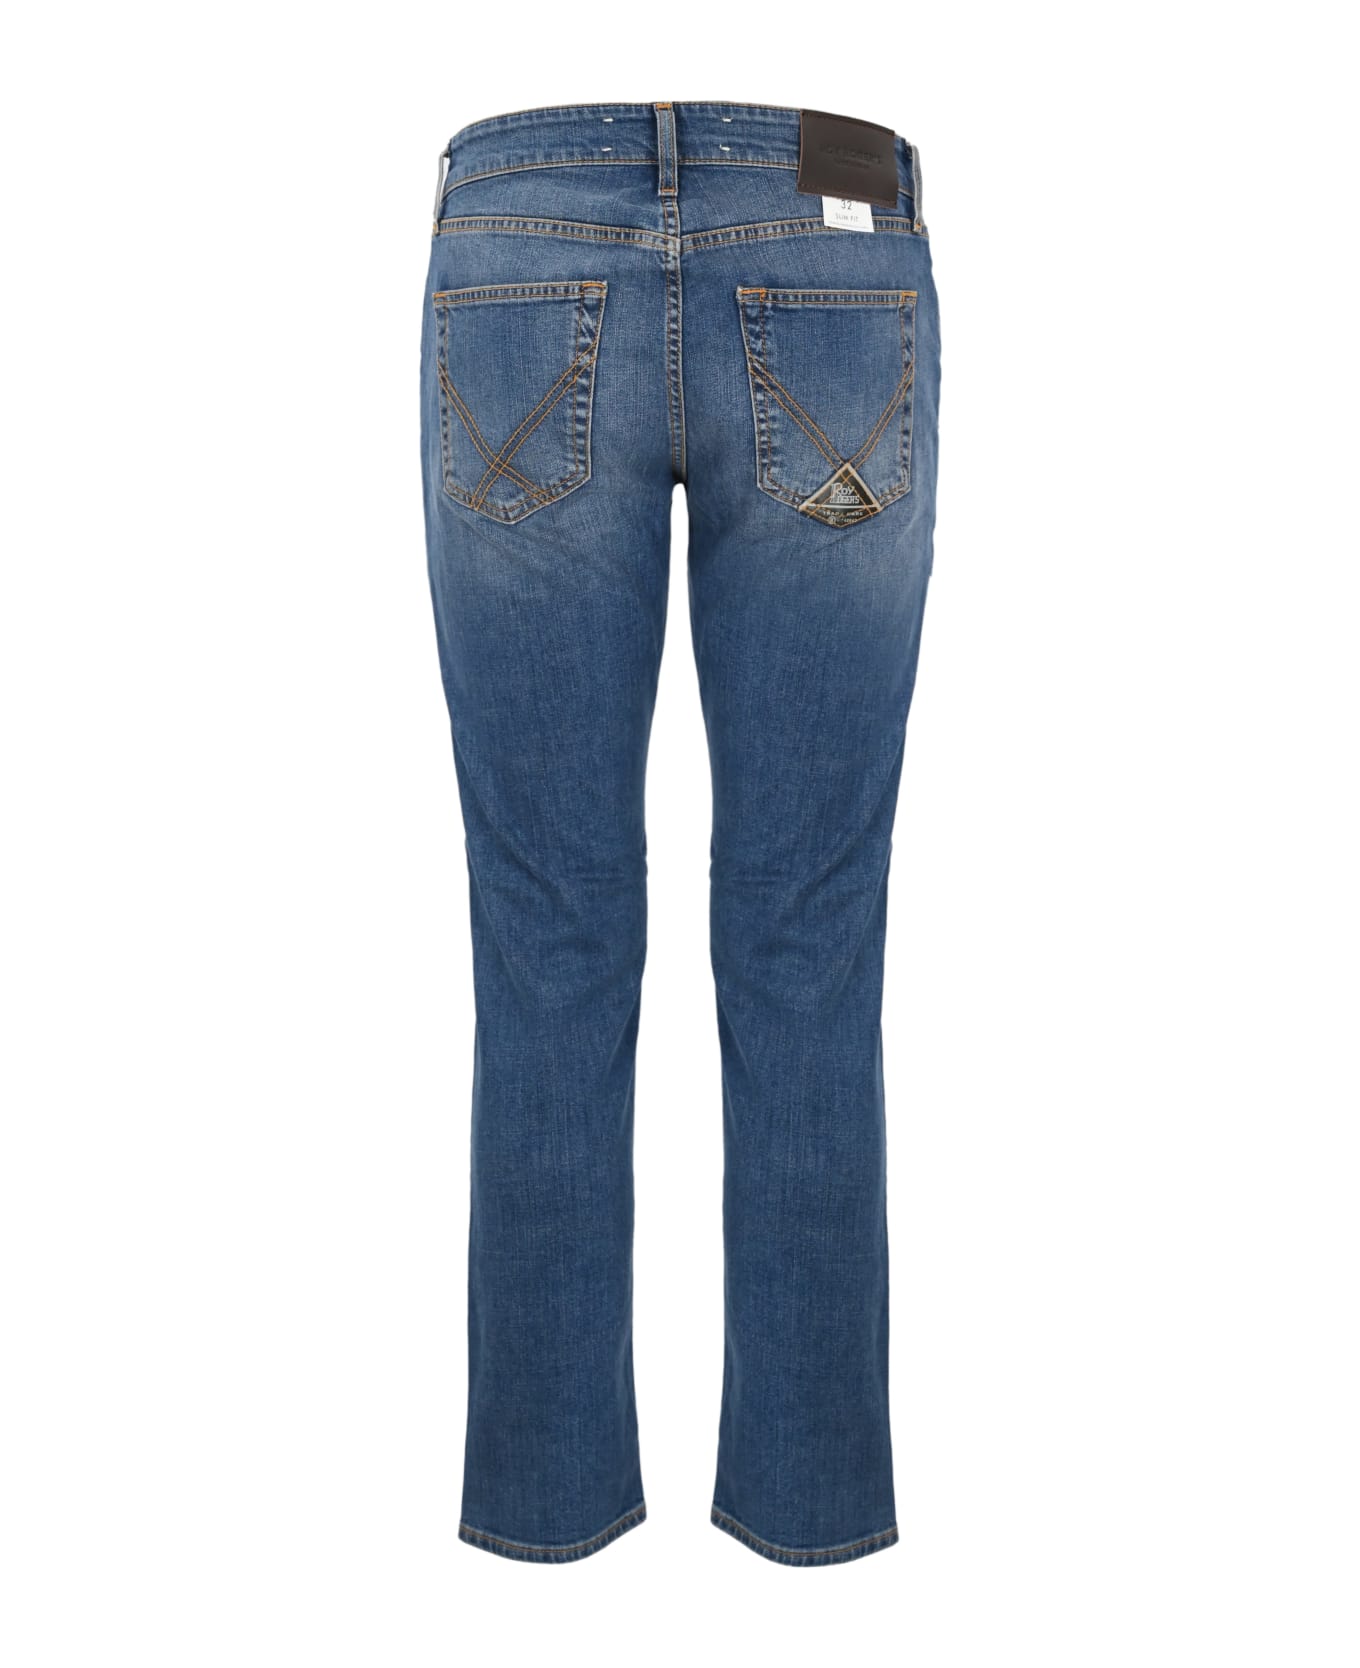 Roy Rogers 527 Denim Jeans - Denim